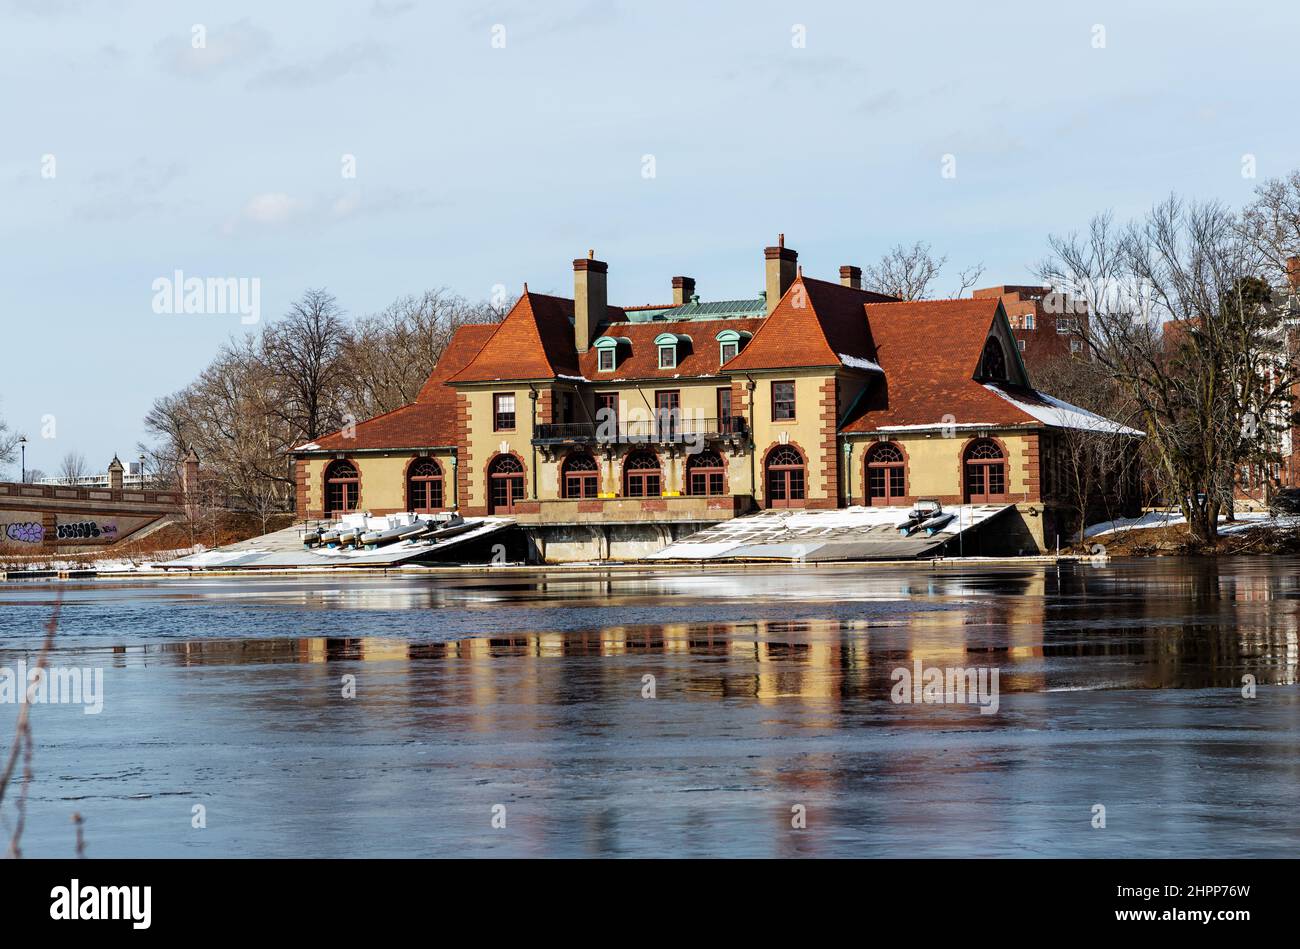 Cambridge, Massachusetts, USA - February 16, 2022: Harvard Univeristy’s Weld Boathouse on the Charles River. Built in 1906. Stock Photo